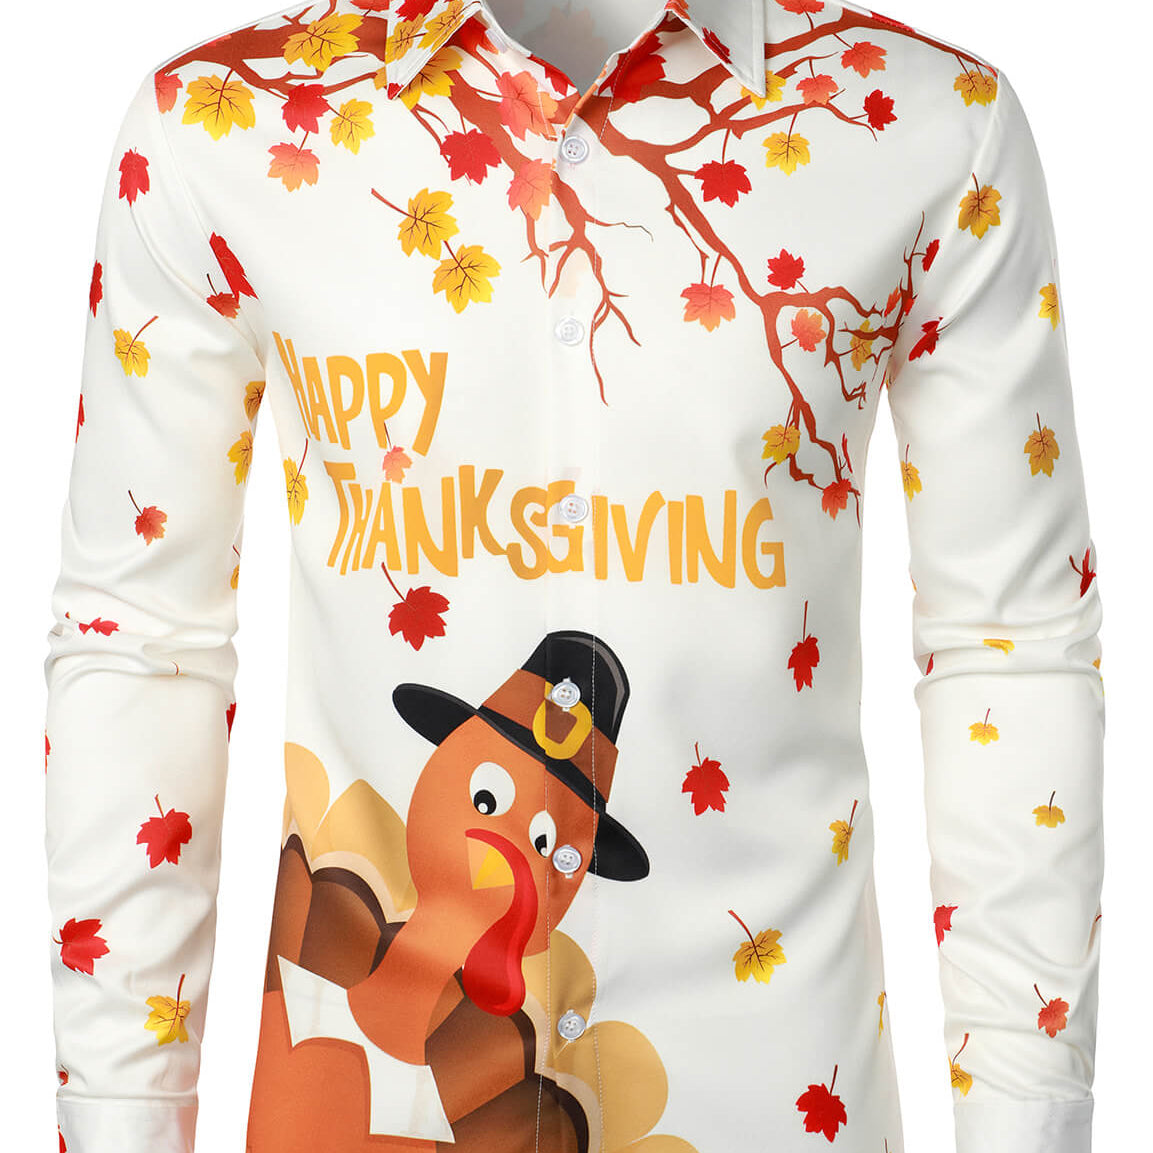 Men's Holiday Happy Thanksgiving Day Cute Cartoon Turkey Day Button Long Sleeve Shirt